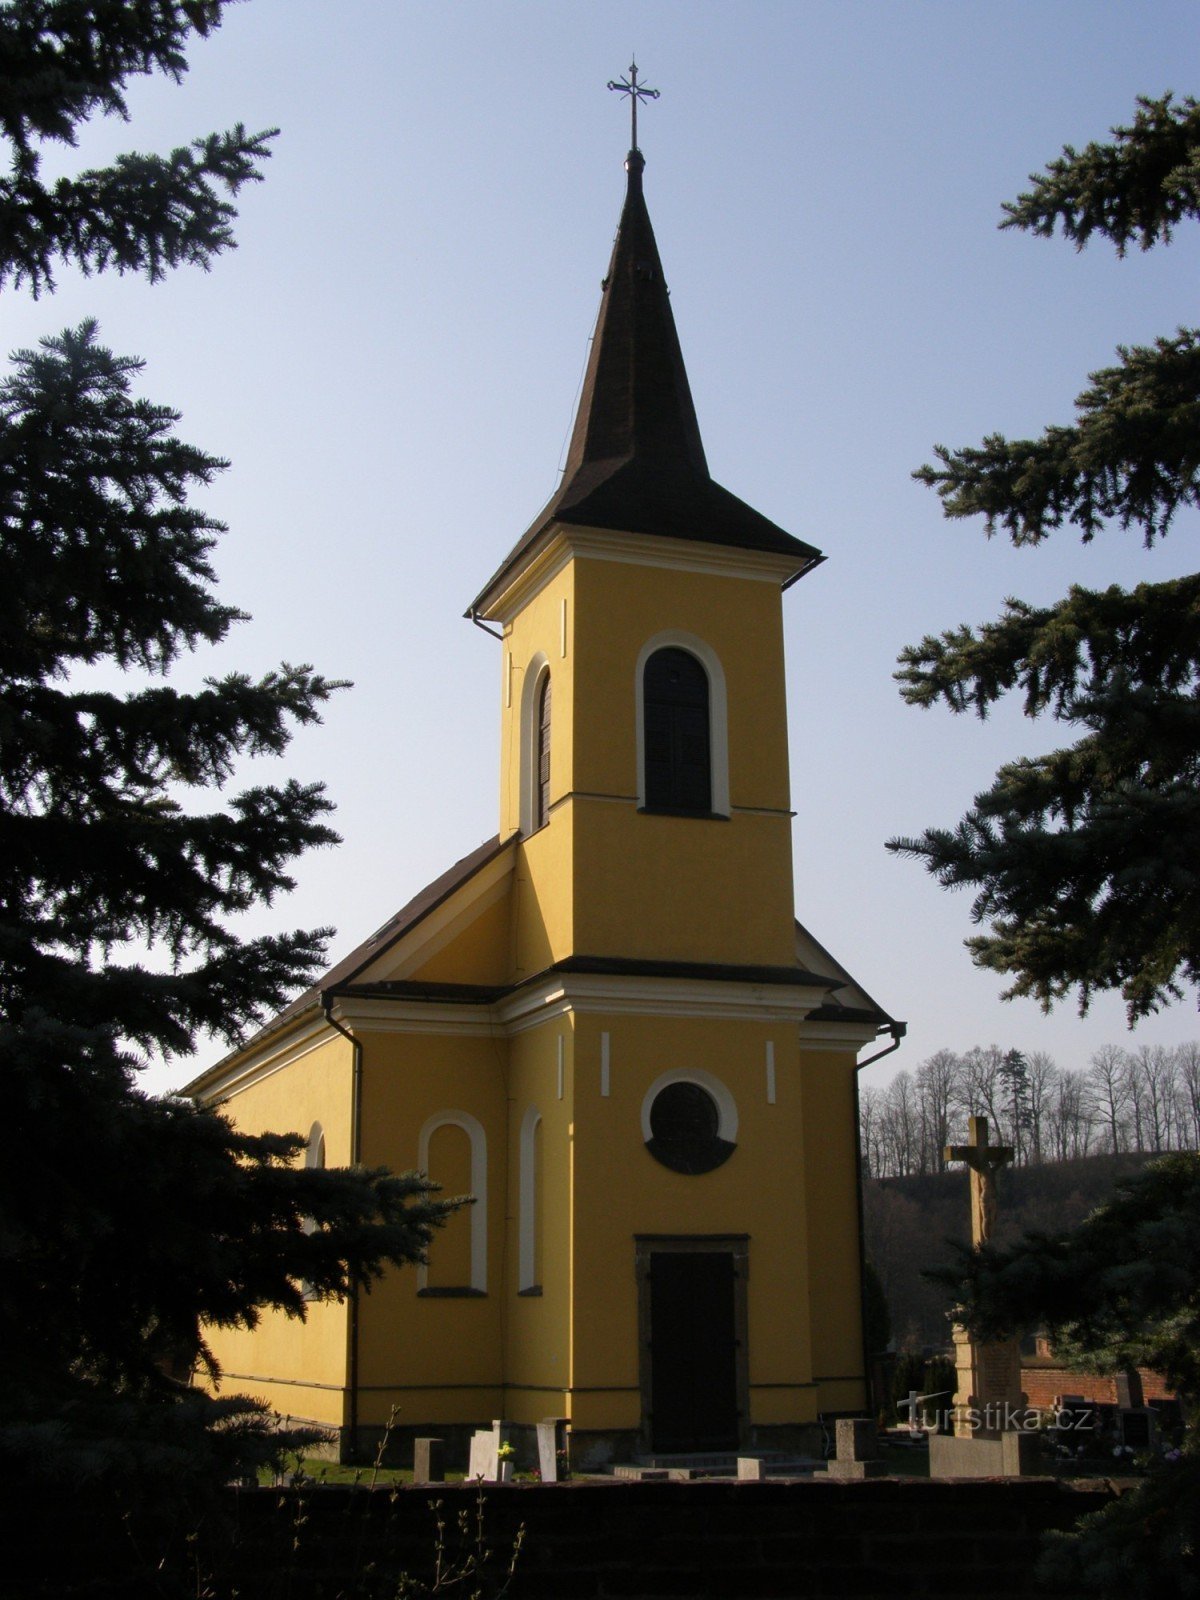 Helvíkovice - capela Sf. Antonina